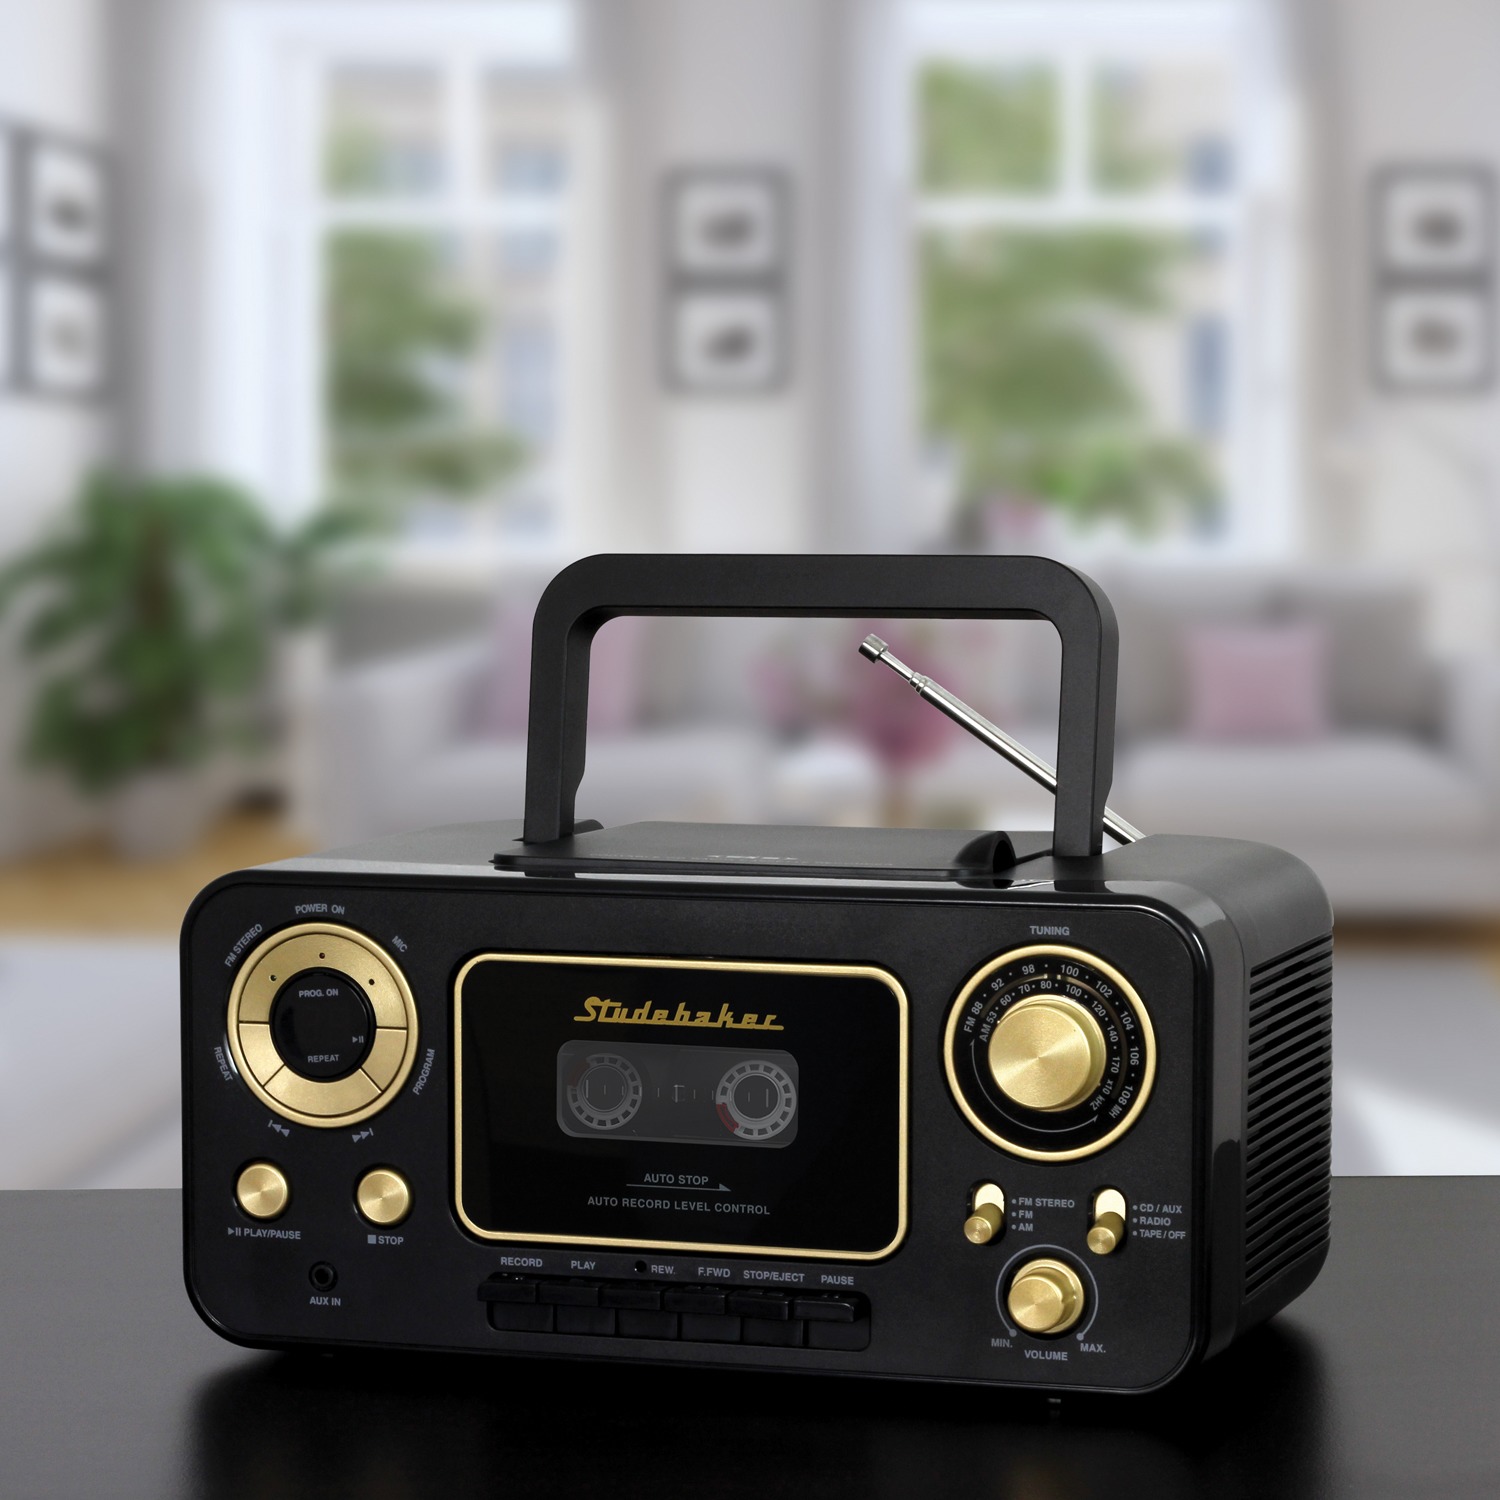 Studebaker SB2135BG Portable Stereo CD Player with AM/FM Radio & Cassette Player/Recorder (Black & Gold) - image 2 of 4